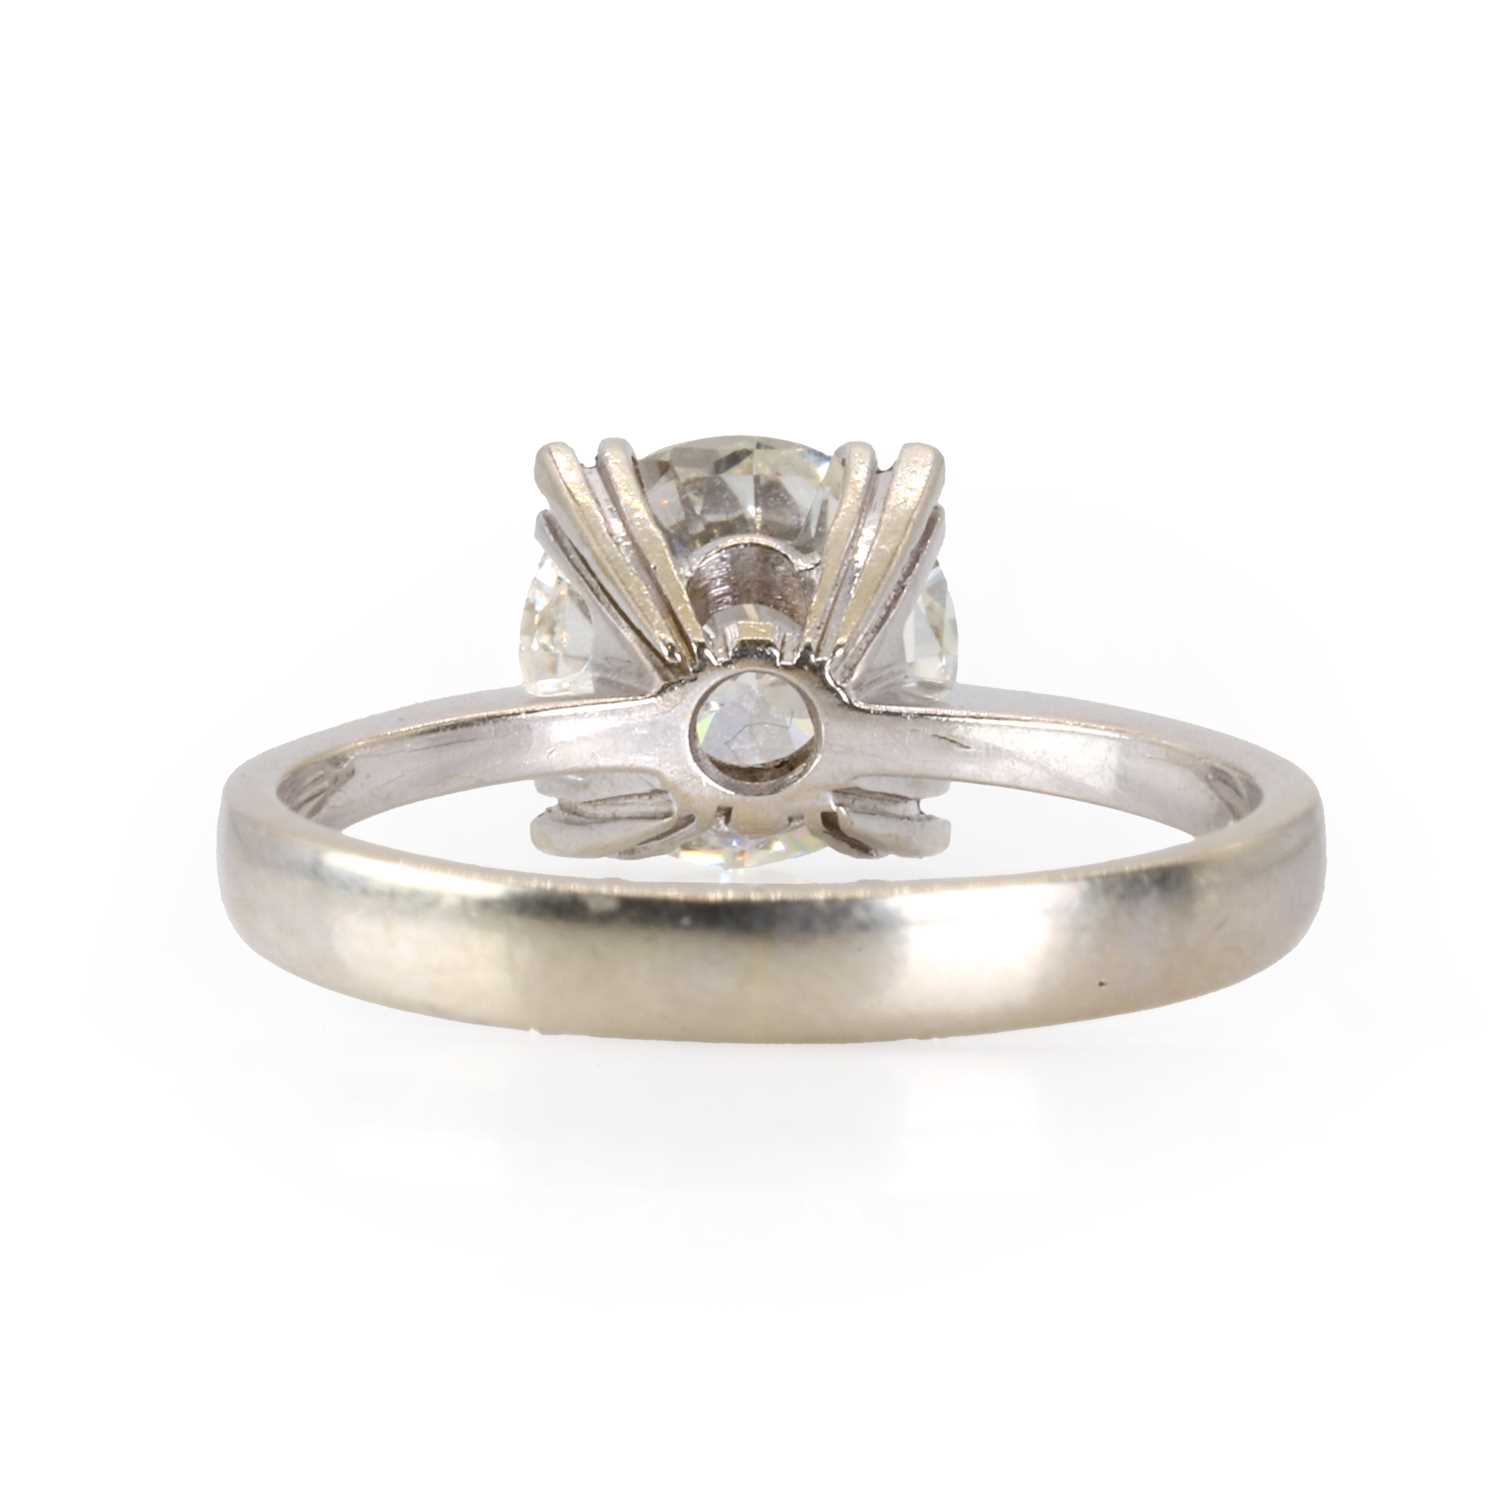 A white gold single stone diamond ring, - Image 2 of 3